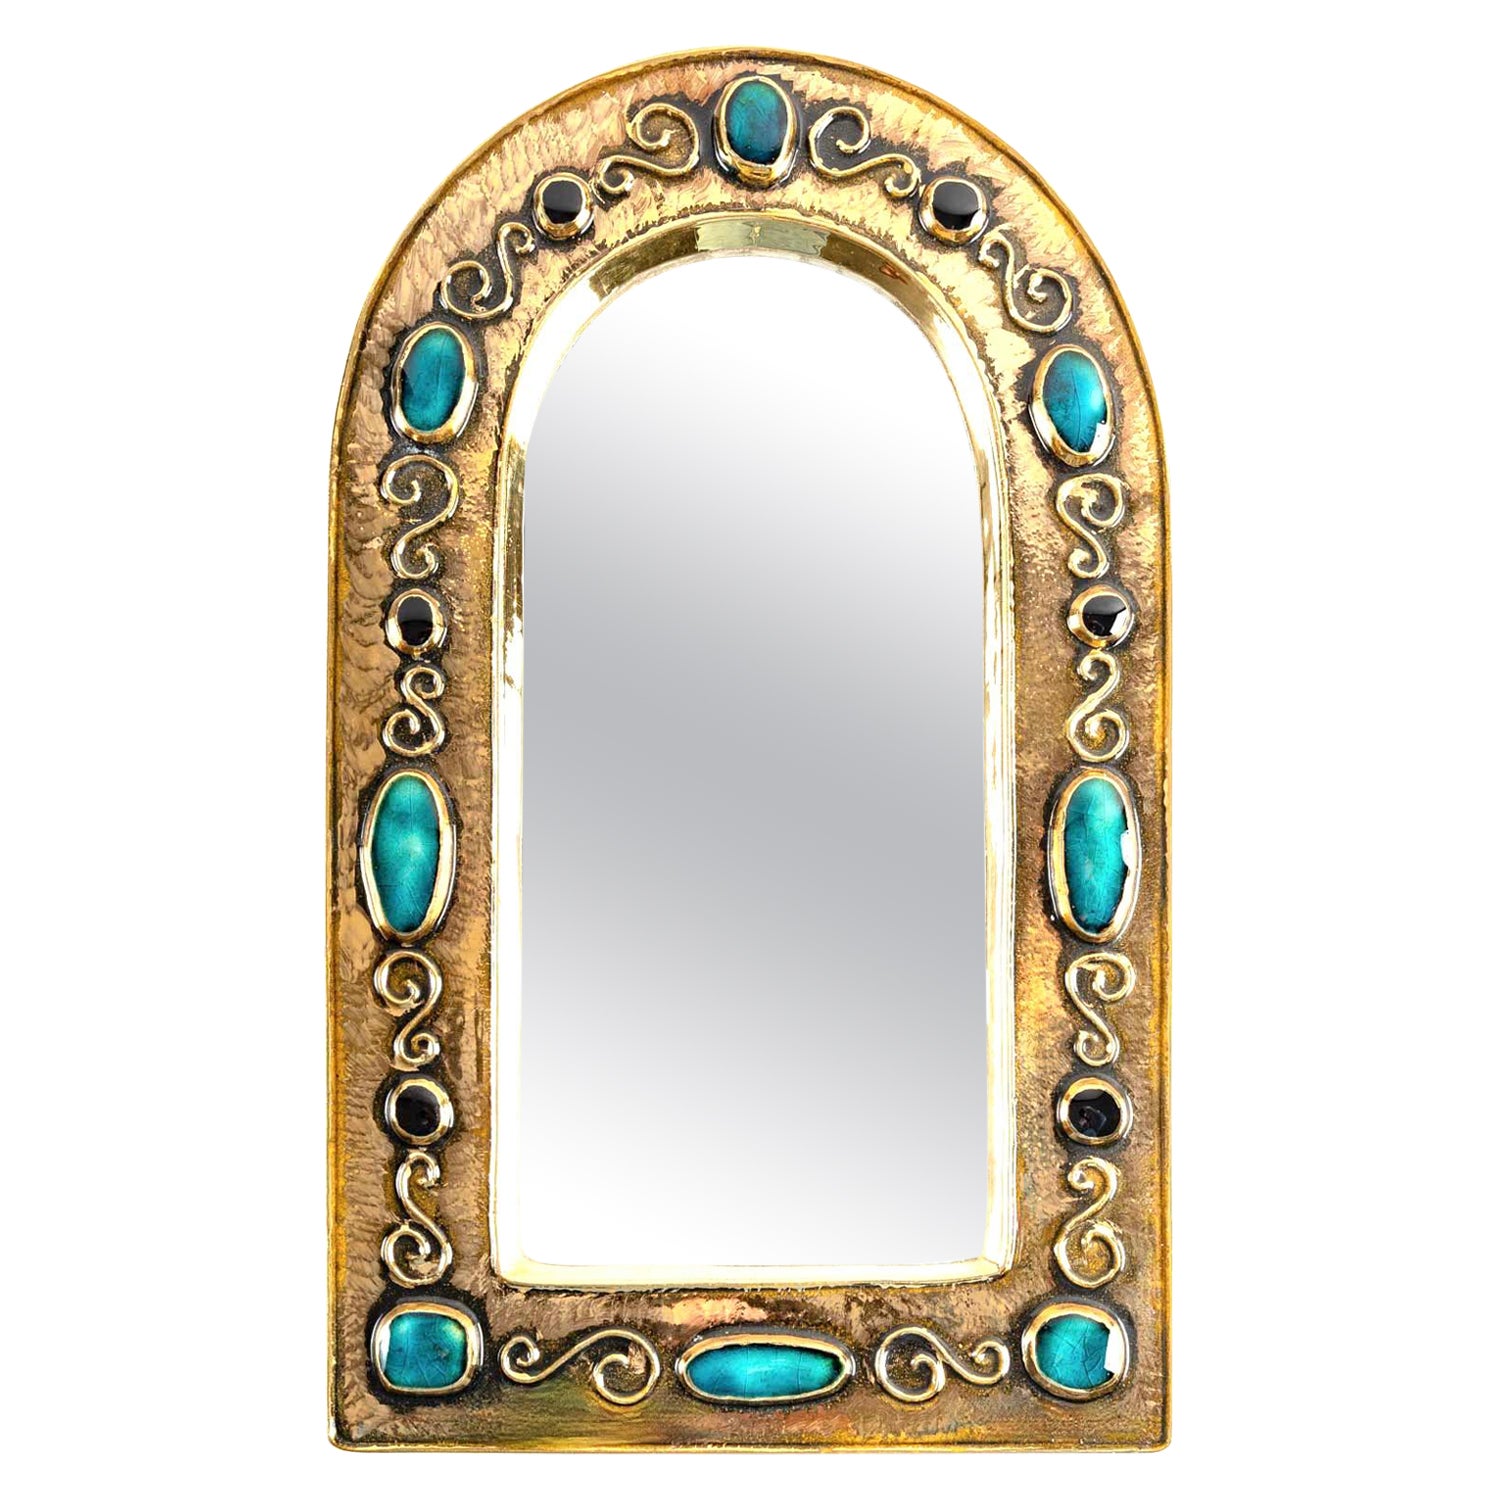 1970 François Lembo Mirror, Ceramic, Jeweled, Gold, Turquoise, Black, Signed